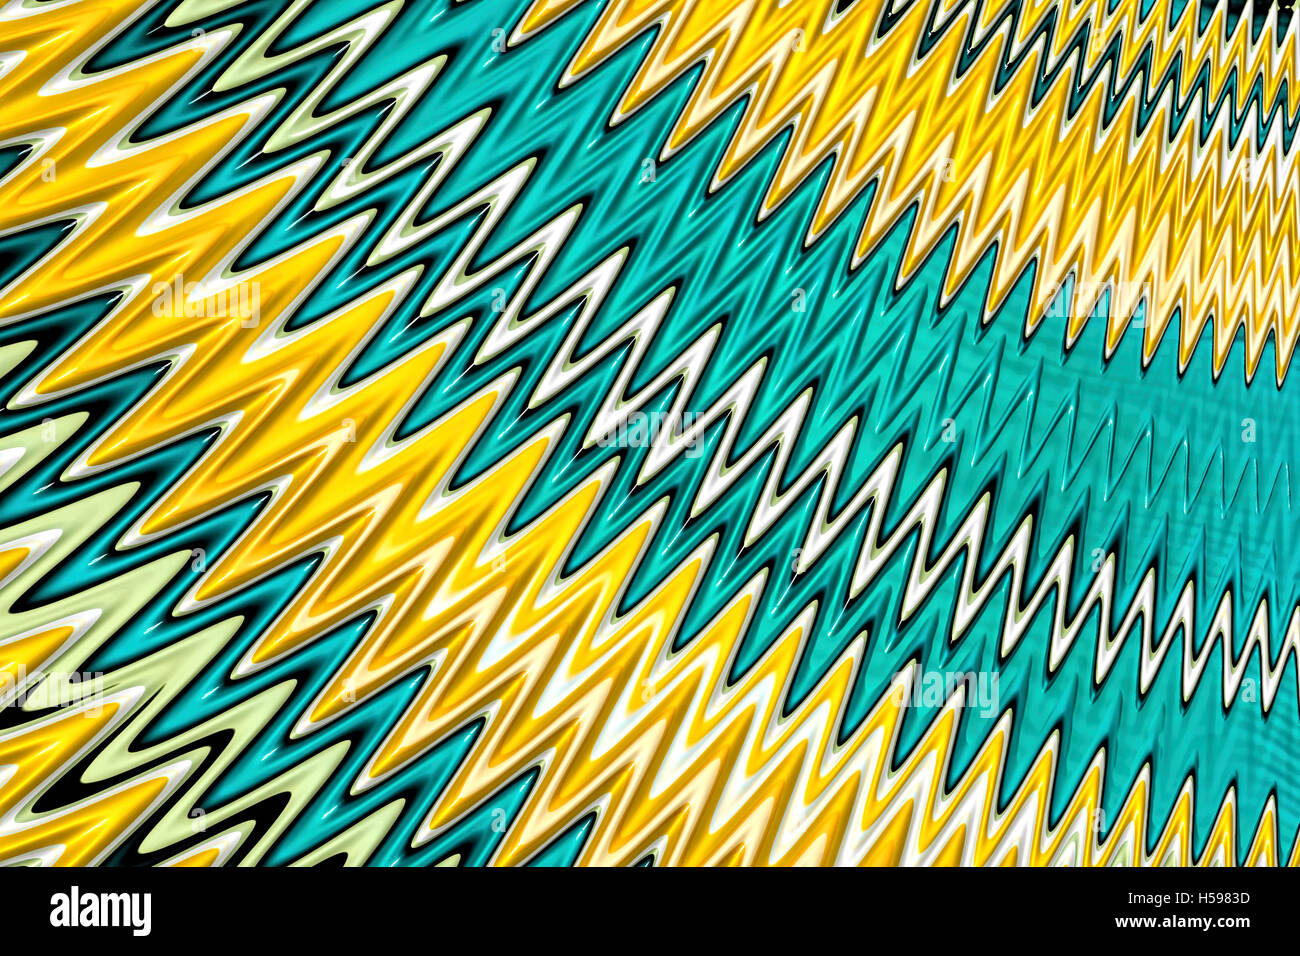 Abstract zigzag background - digitally generated image Stock Photo